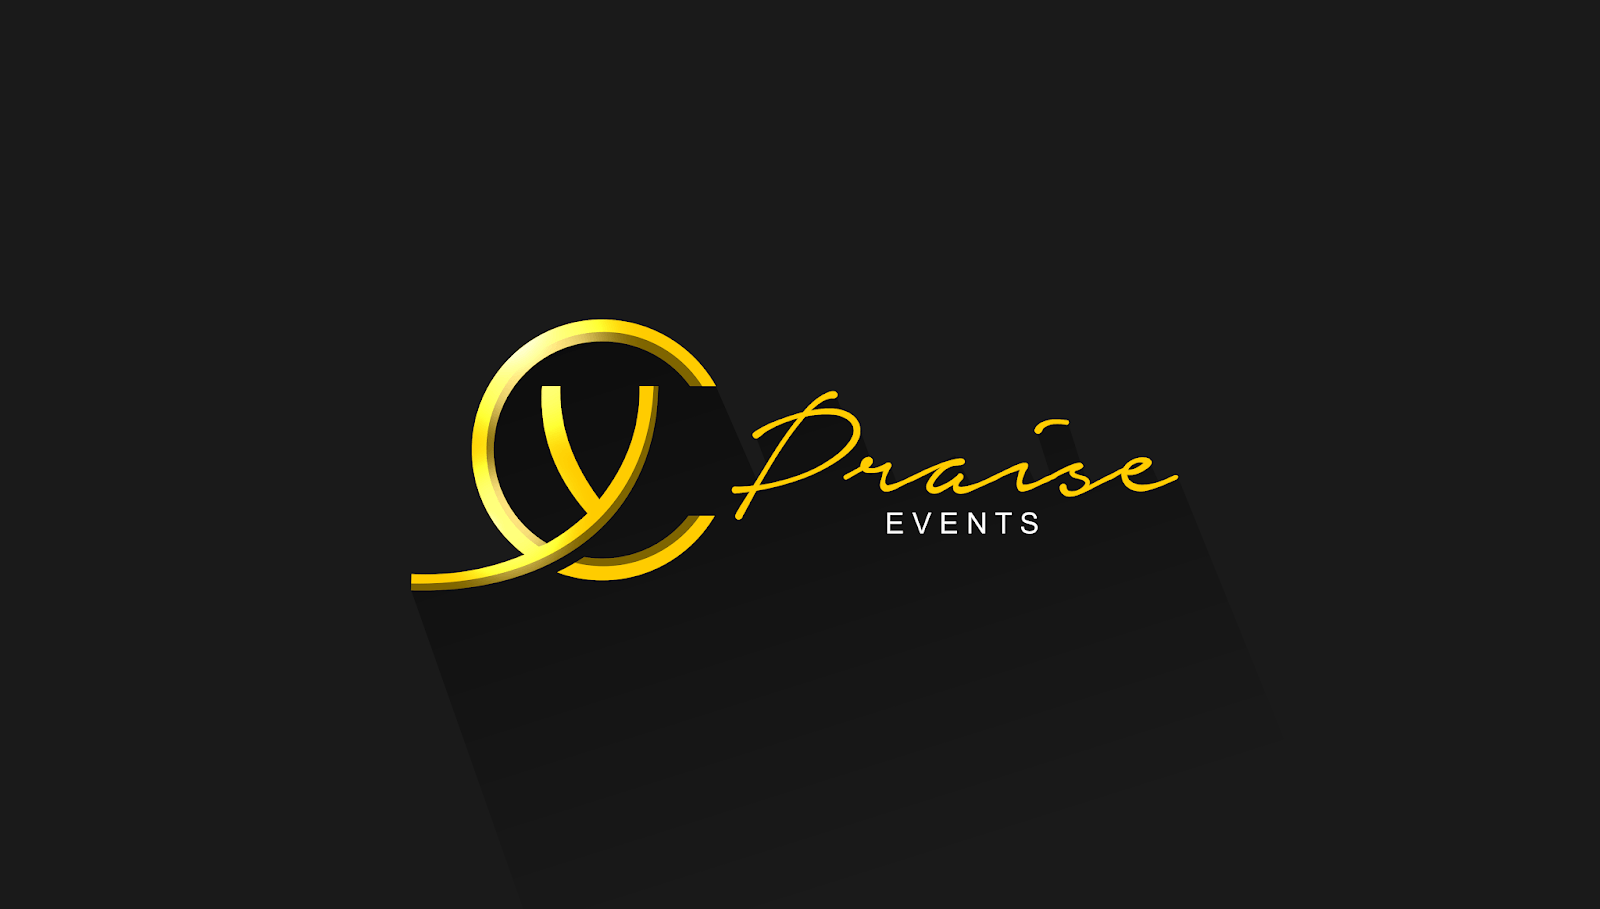 Events Logo - Creative logo design for event planning Ehroo